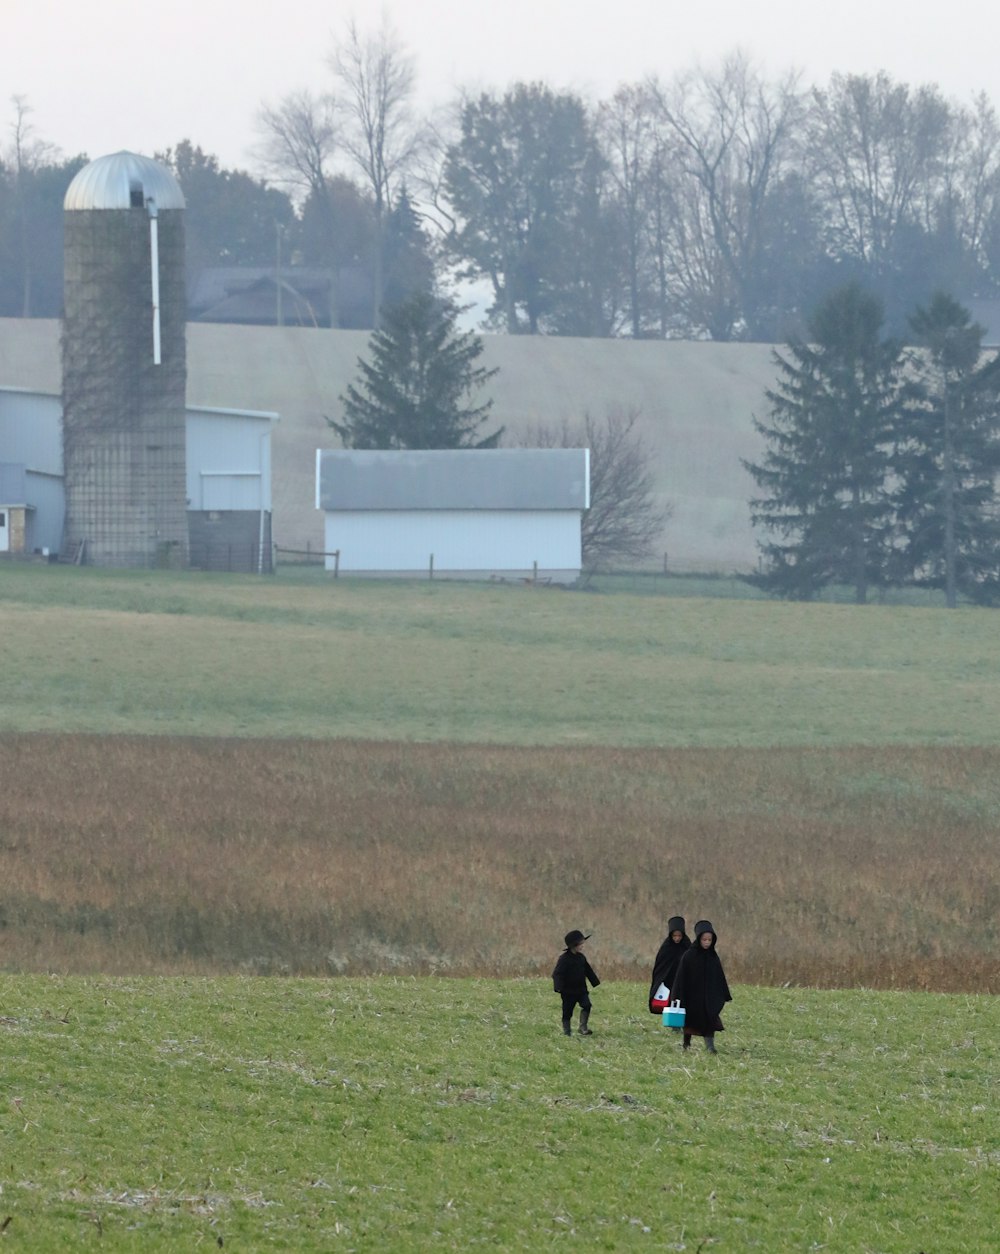 three people walking on grassy field